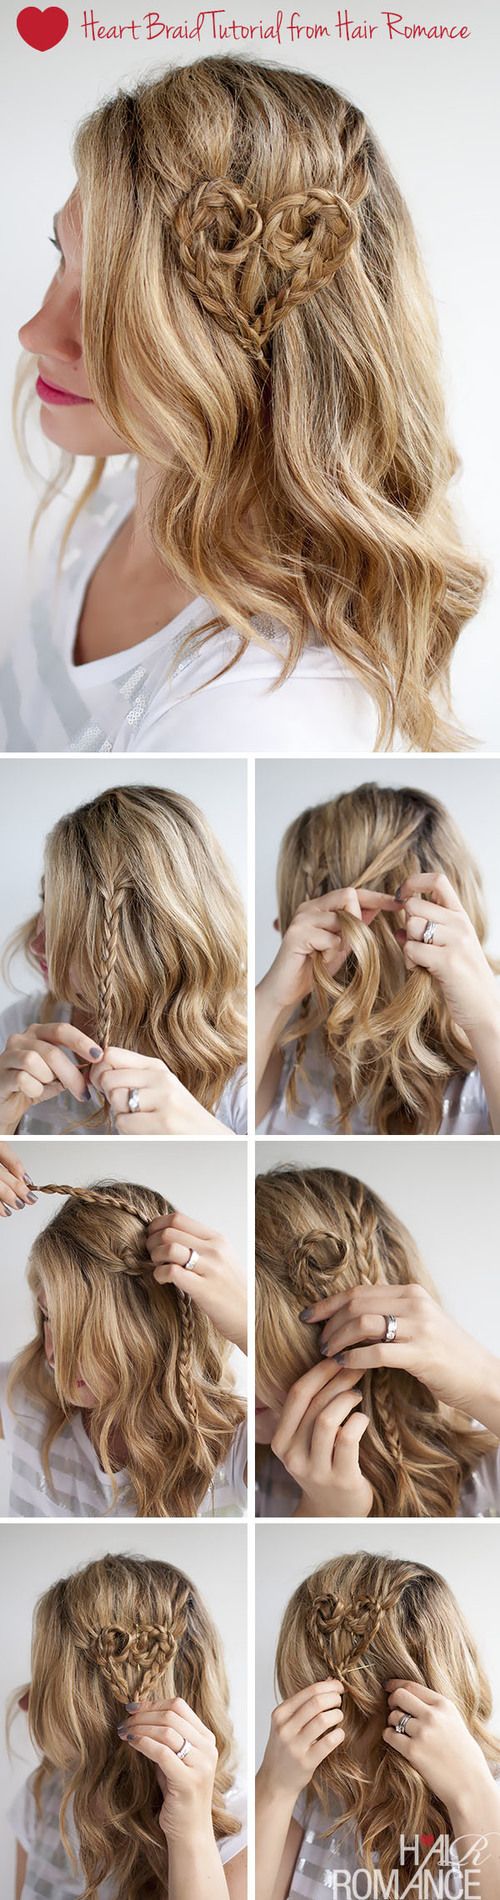 Hair braid tutorial..never seen this way before!